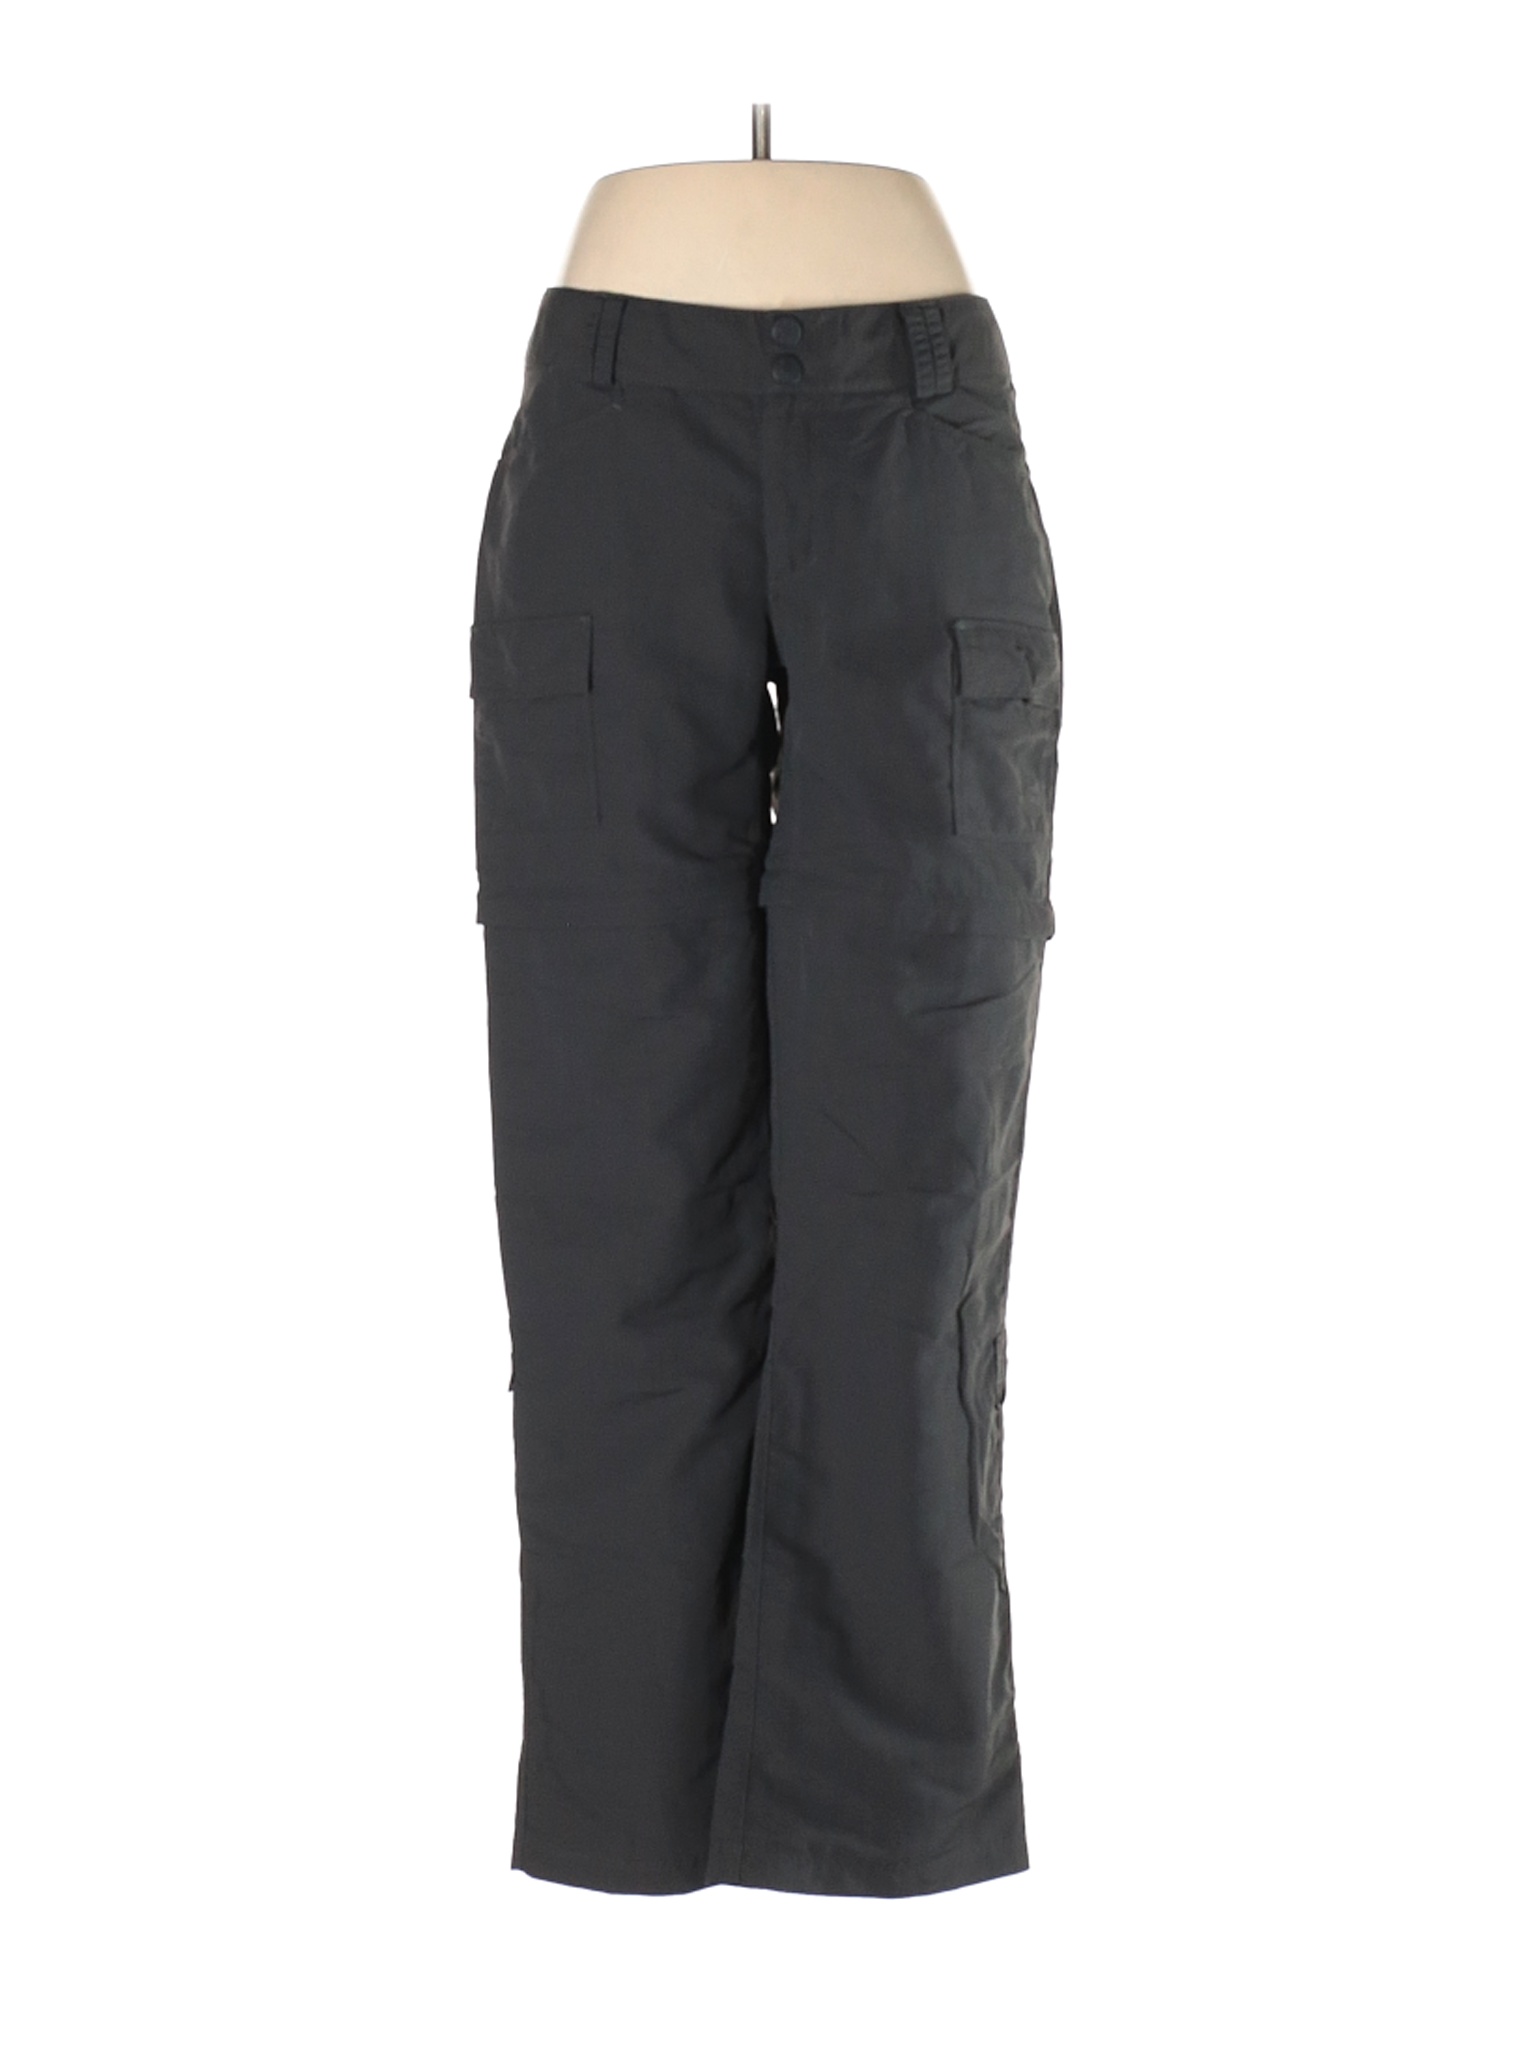 The North Face Women Black Cargo Pants 6 | eBay